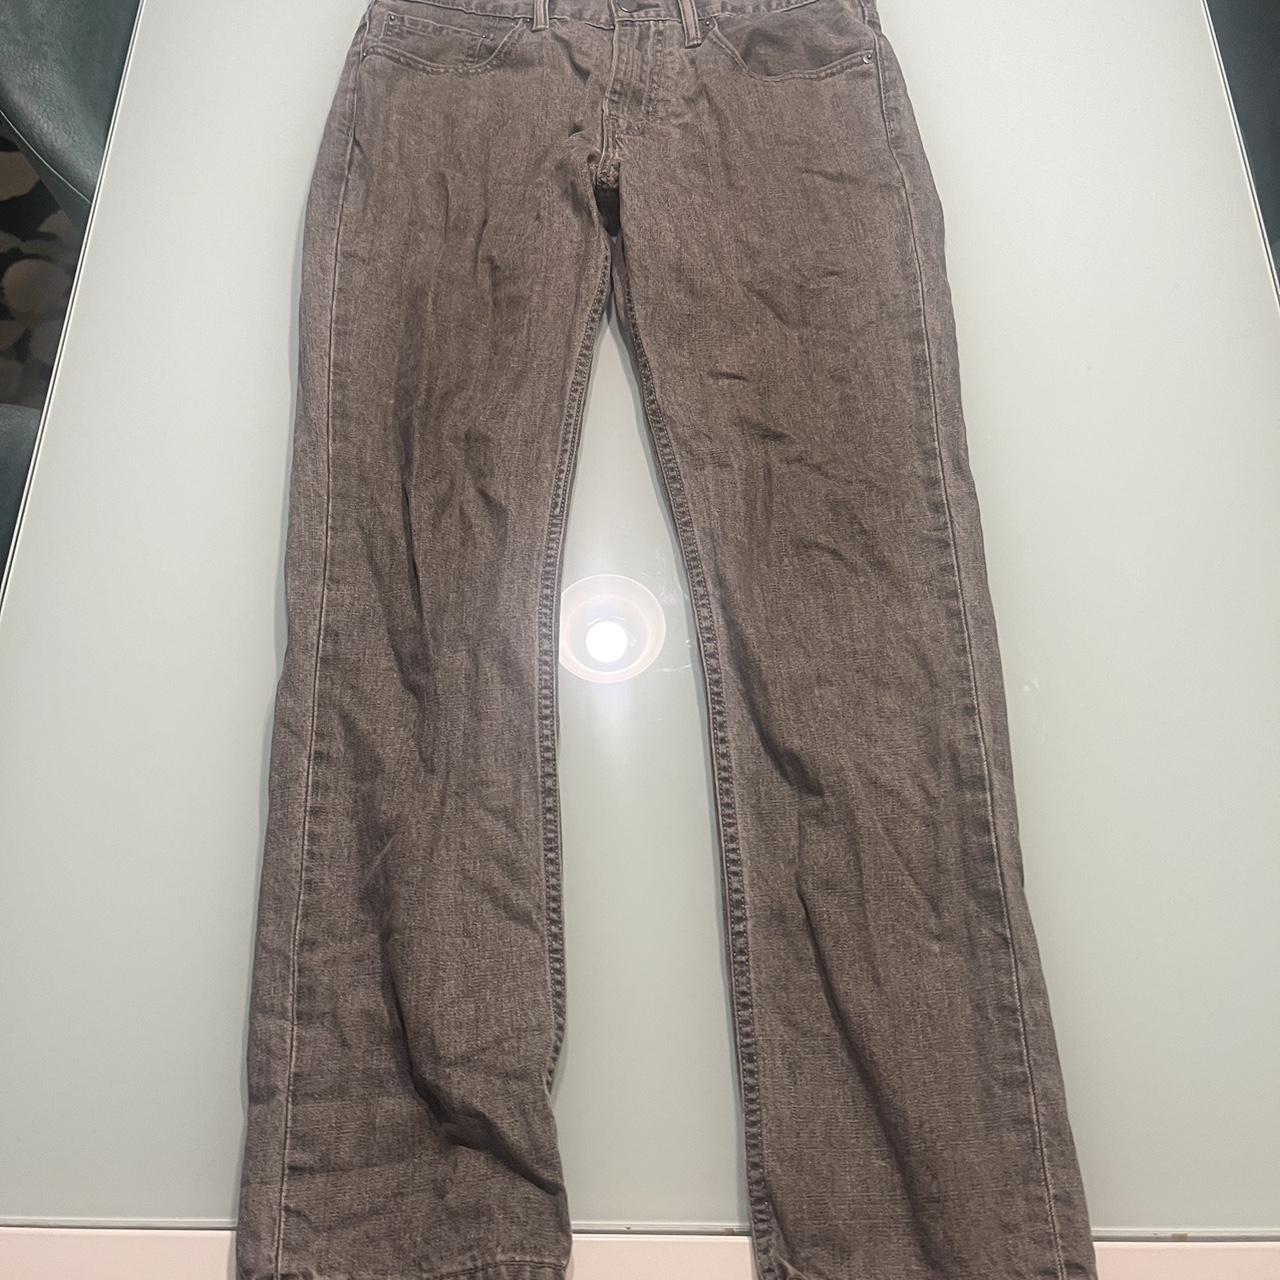 grey Levi’s jeans Size 33x32 good condition - Depop